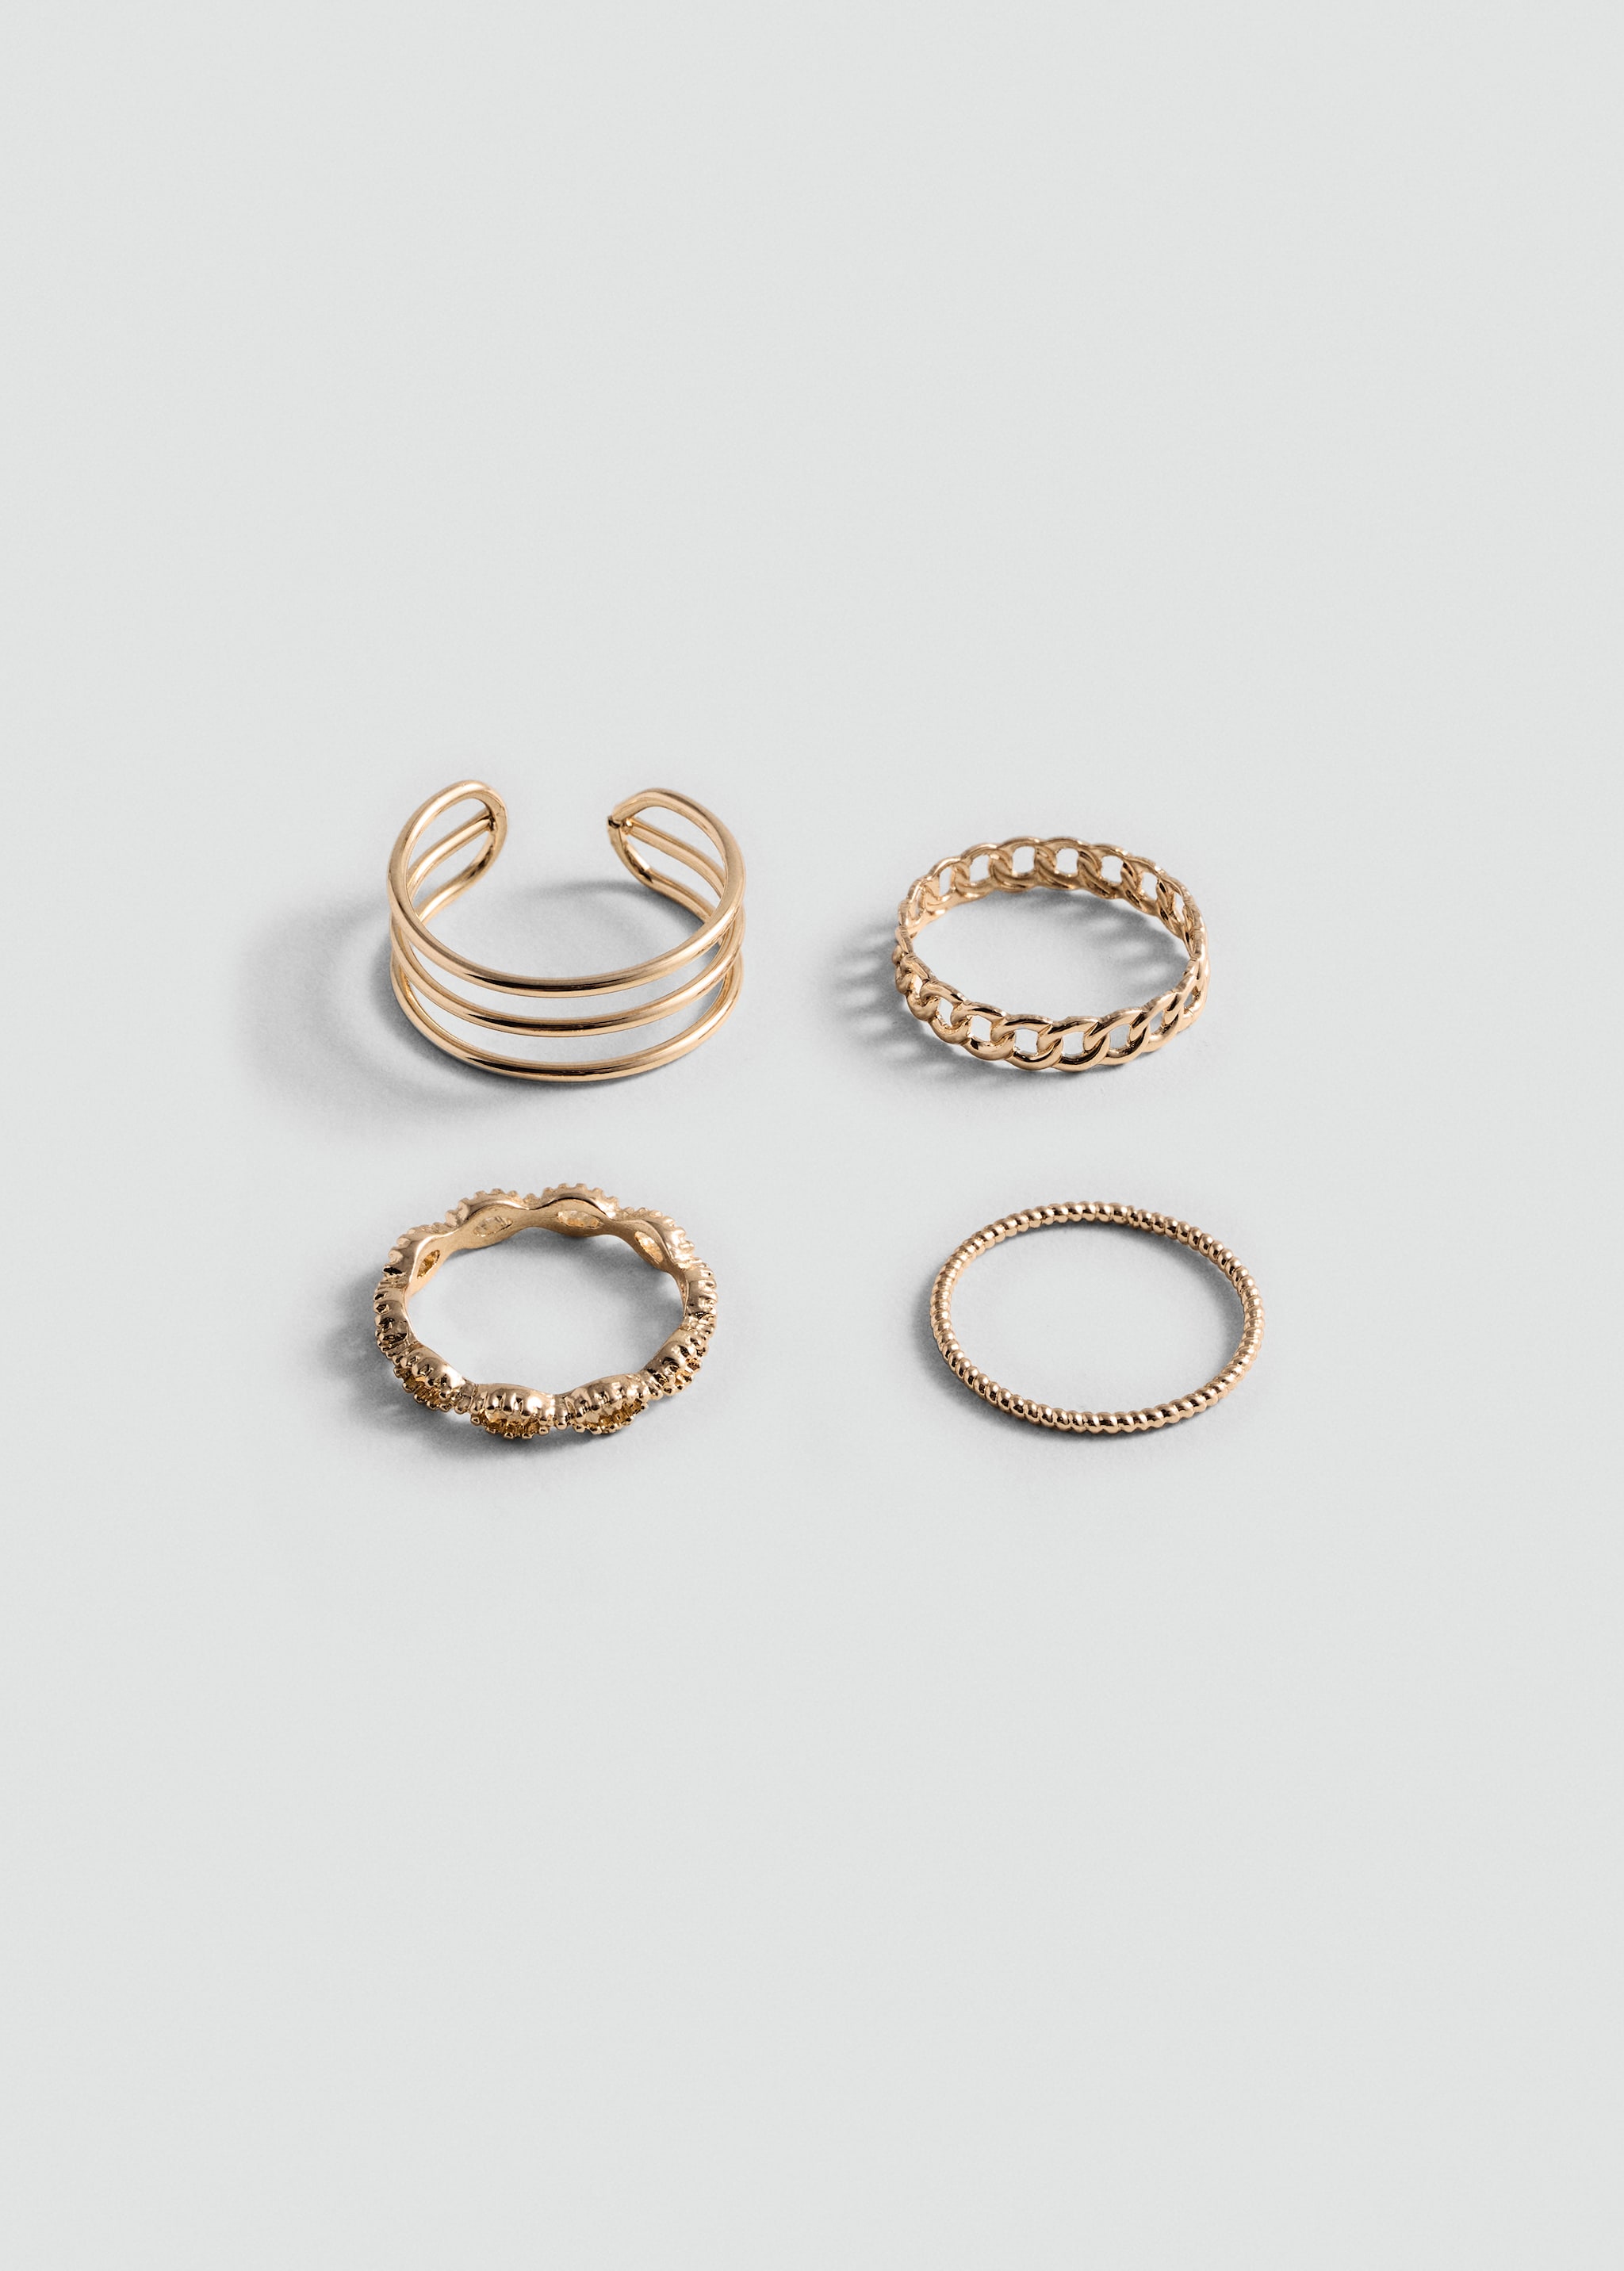  Pack of 4 combined rings - Изделие без модели